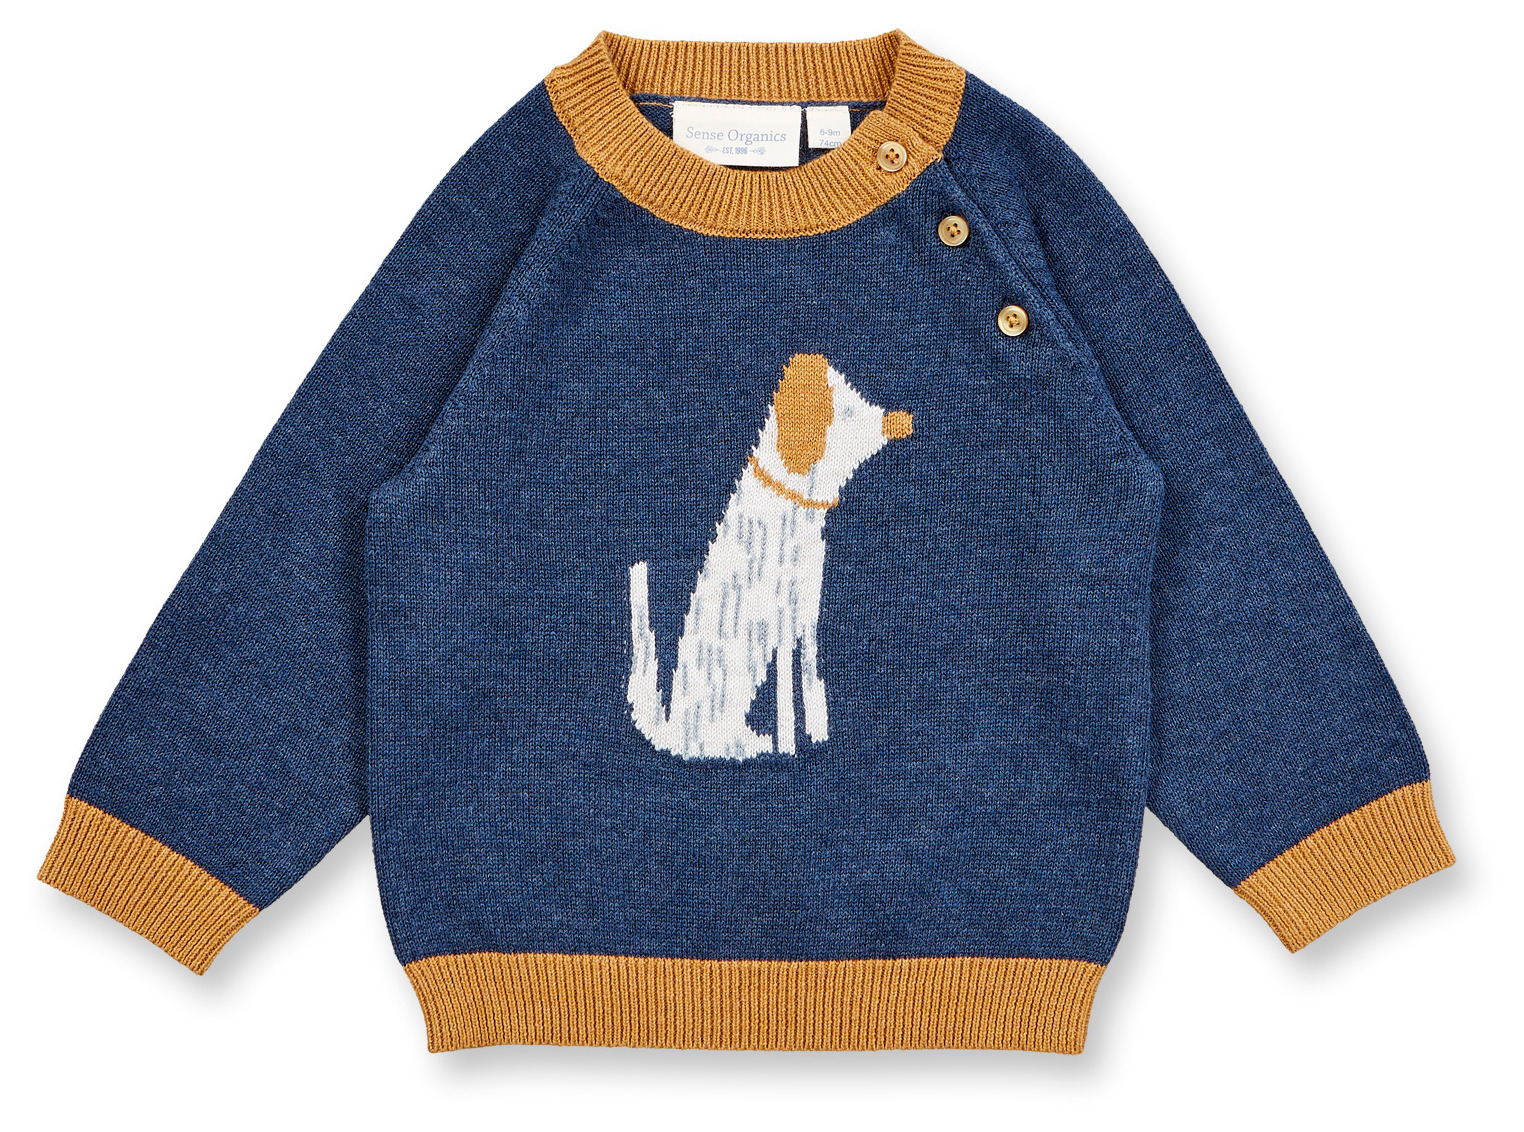 Sense Organic Baby Knitted Sweater Dark Blue Dog